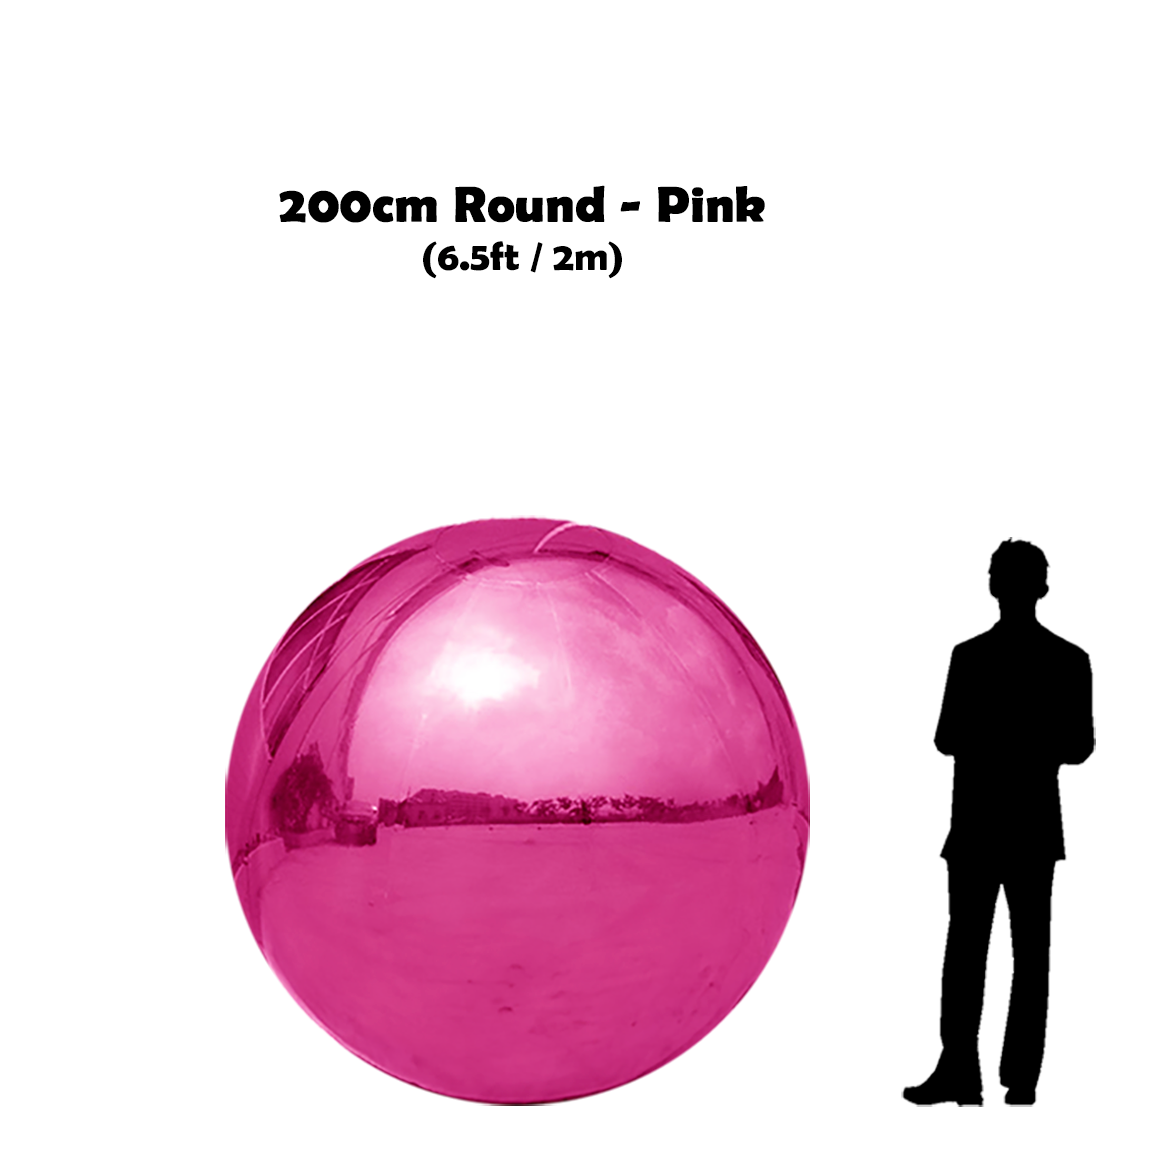 200 cm Big Pink ball beside 5'10 guy silhouette 